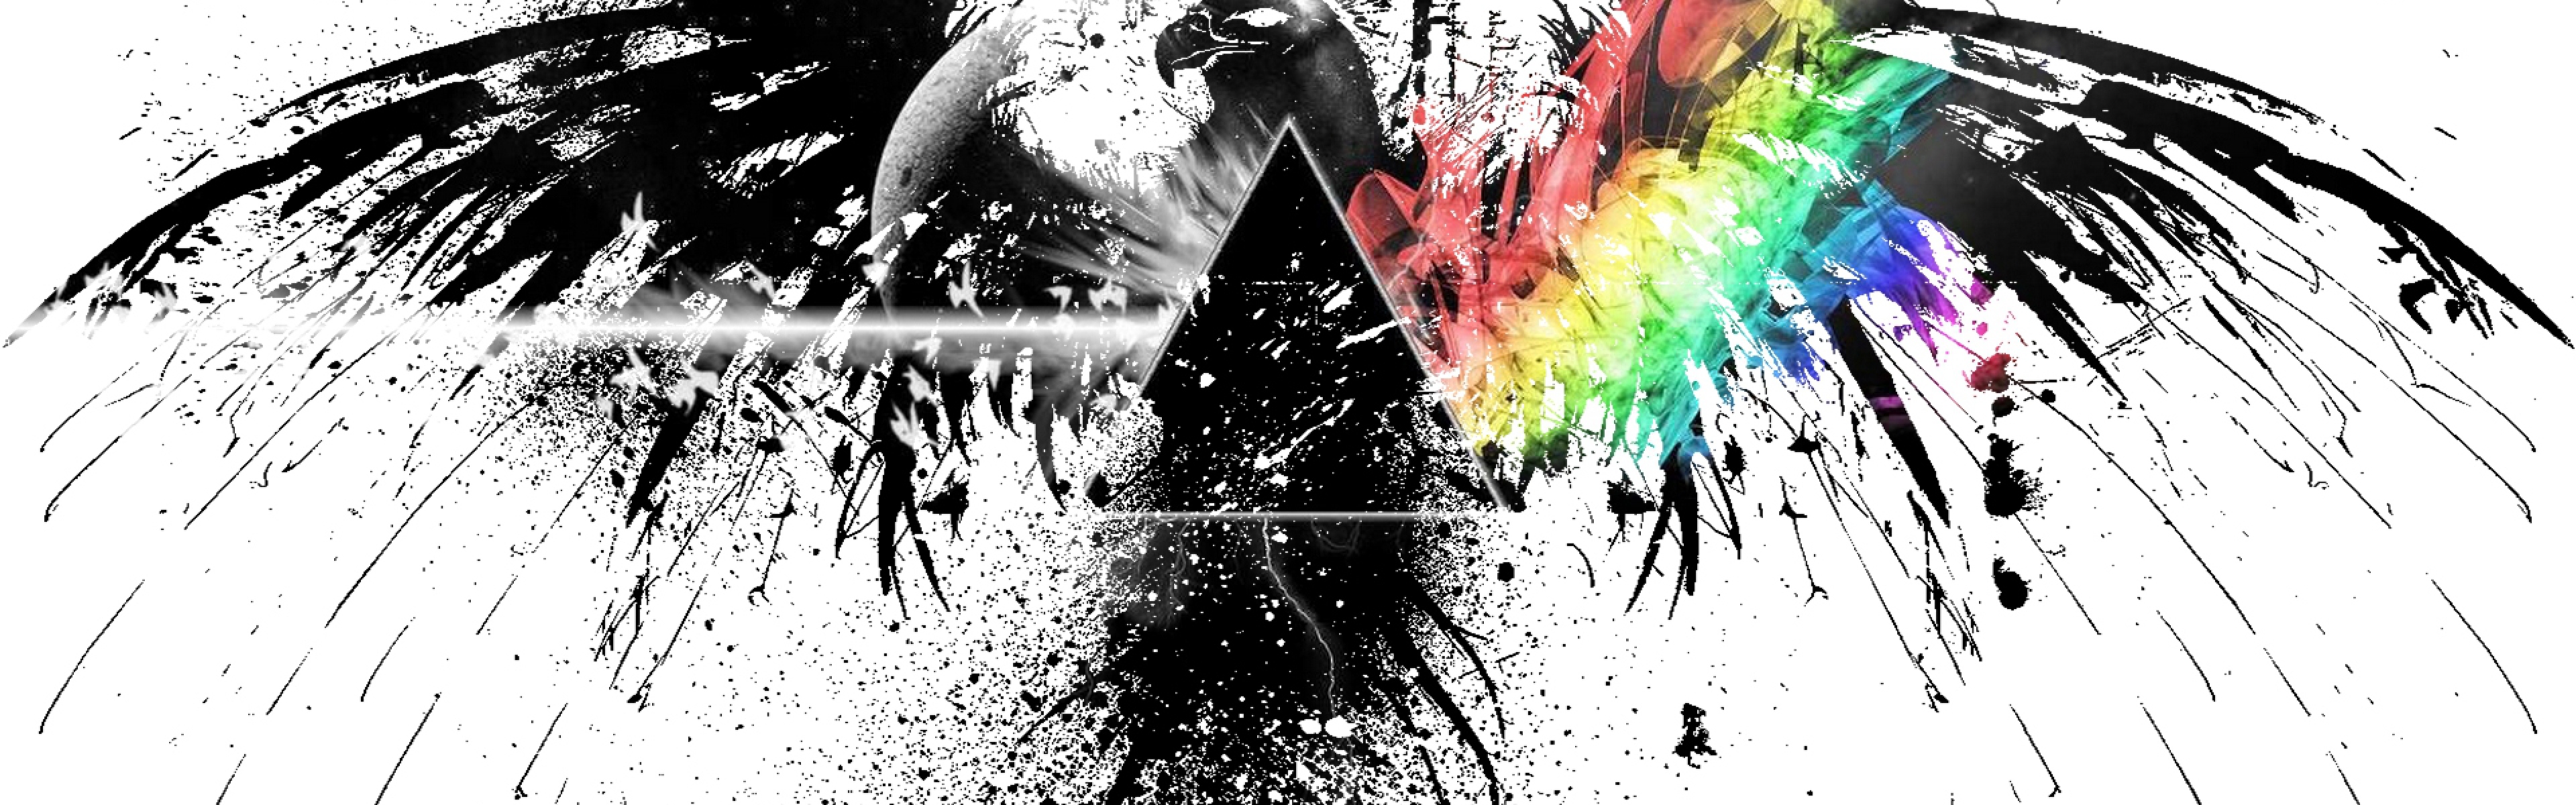 Pink Floyd - Illuminati Wallpaper Cool , HD Wallpaper & Backgrounds